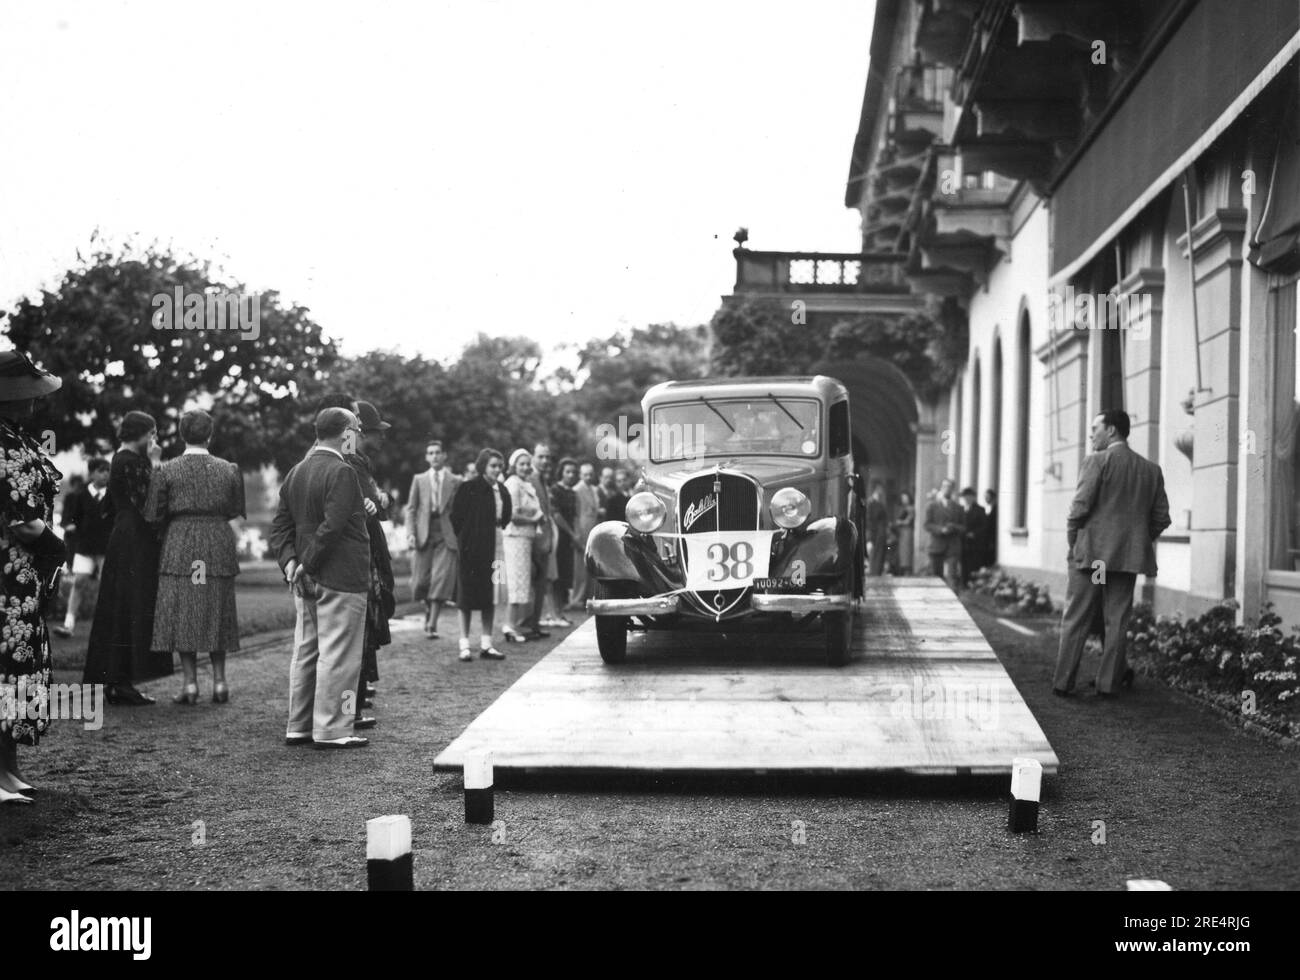 Cernobbio - Concorso d'eleganza automobili Villa d'Este11 giugno 1939 Foto Stock